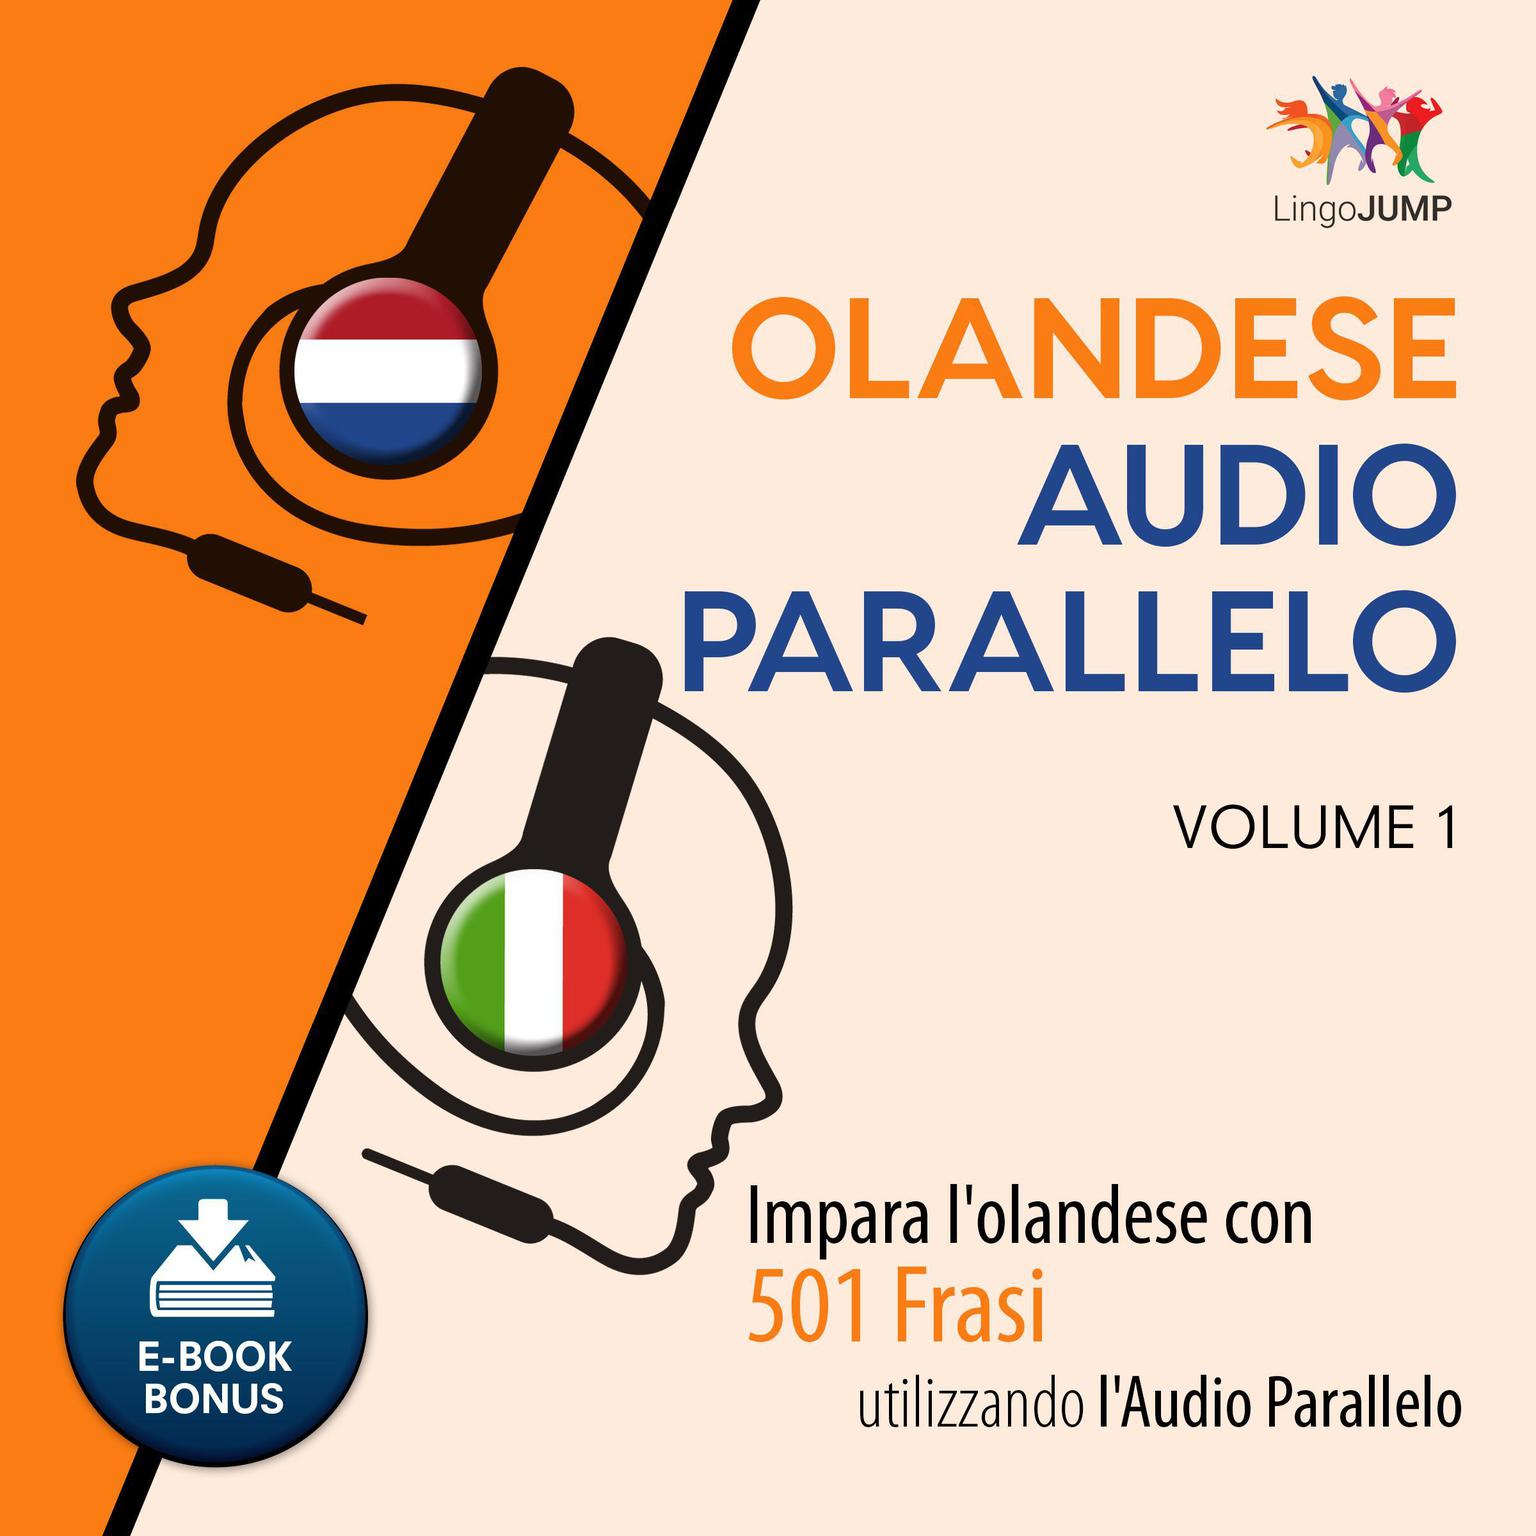 Audio Parallelo Olandese - Impara lolandese con 501 Frasi utilizzando lAudio Parallelo - Volume 1 Audiobook, by Lingo Jump